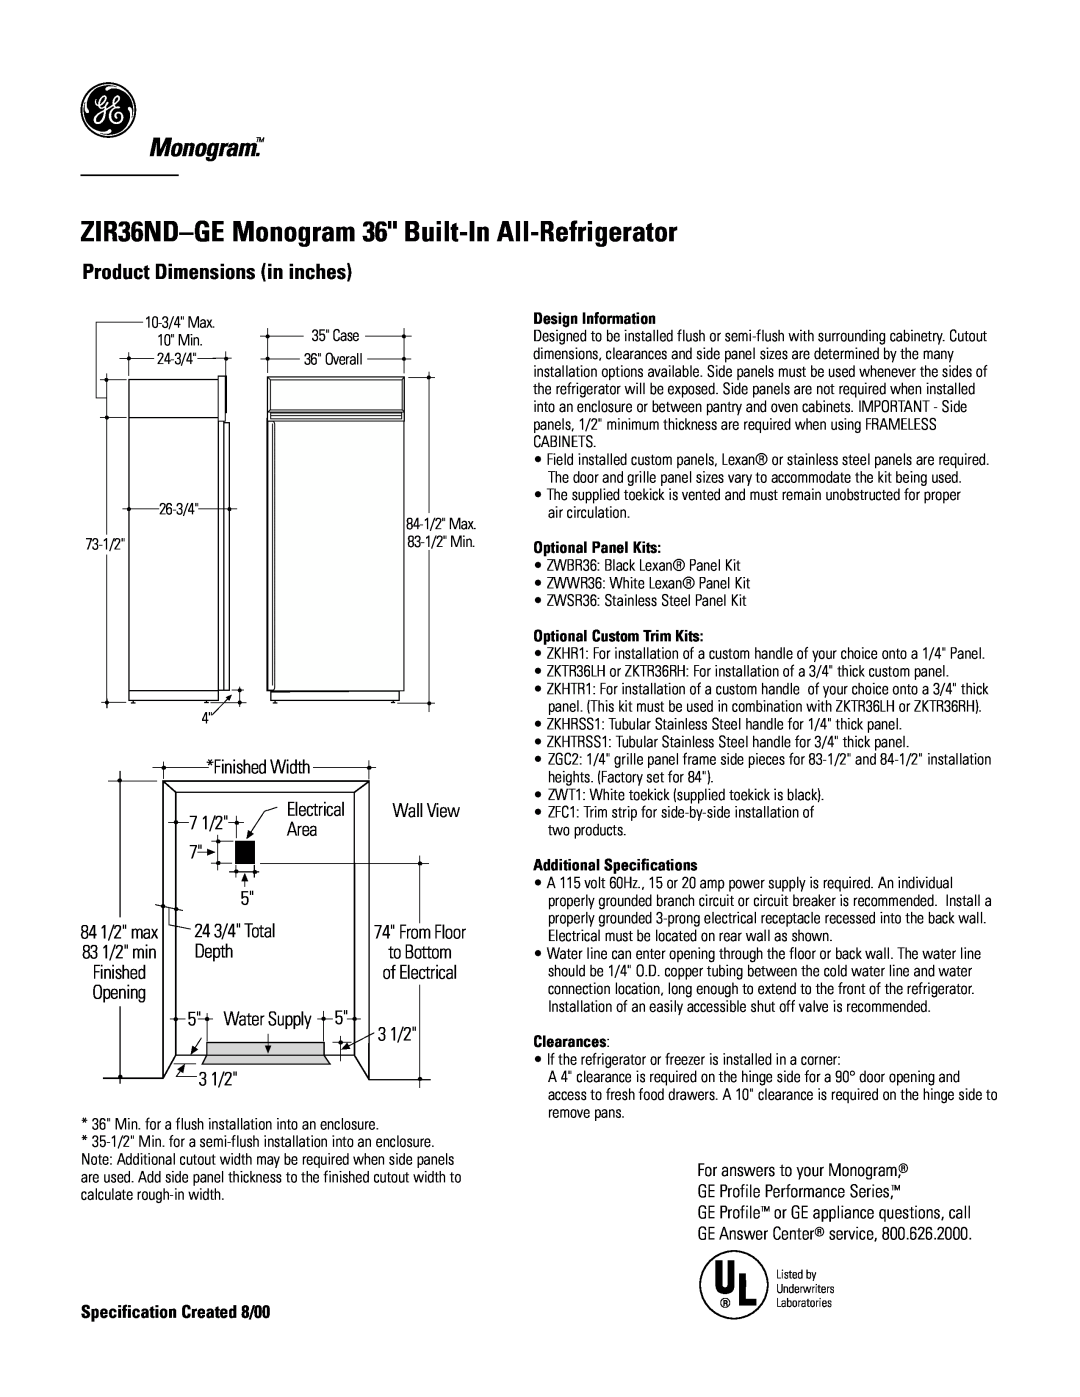 GE Monogram ZIR36NDGE dimensions ZIR36ND-GEMonogram 36 Built-In All-Refrigerator, Product Dimensions in inches 